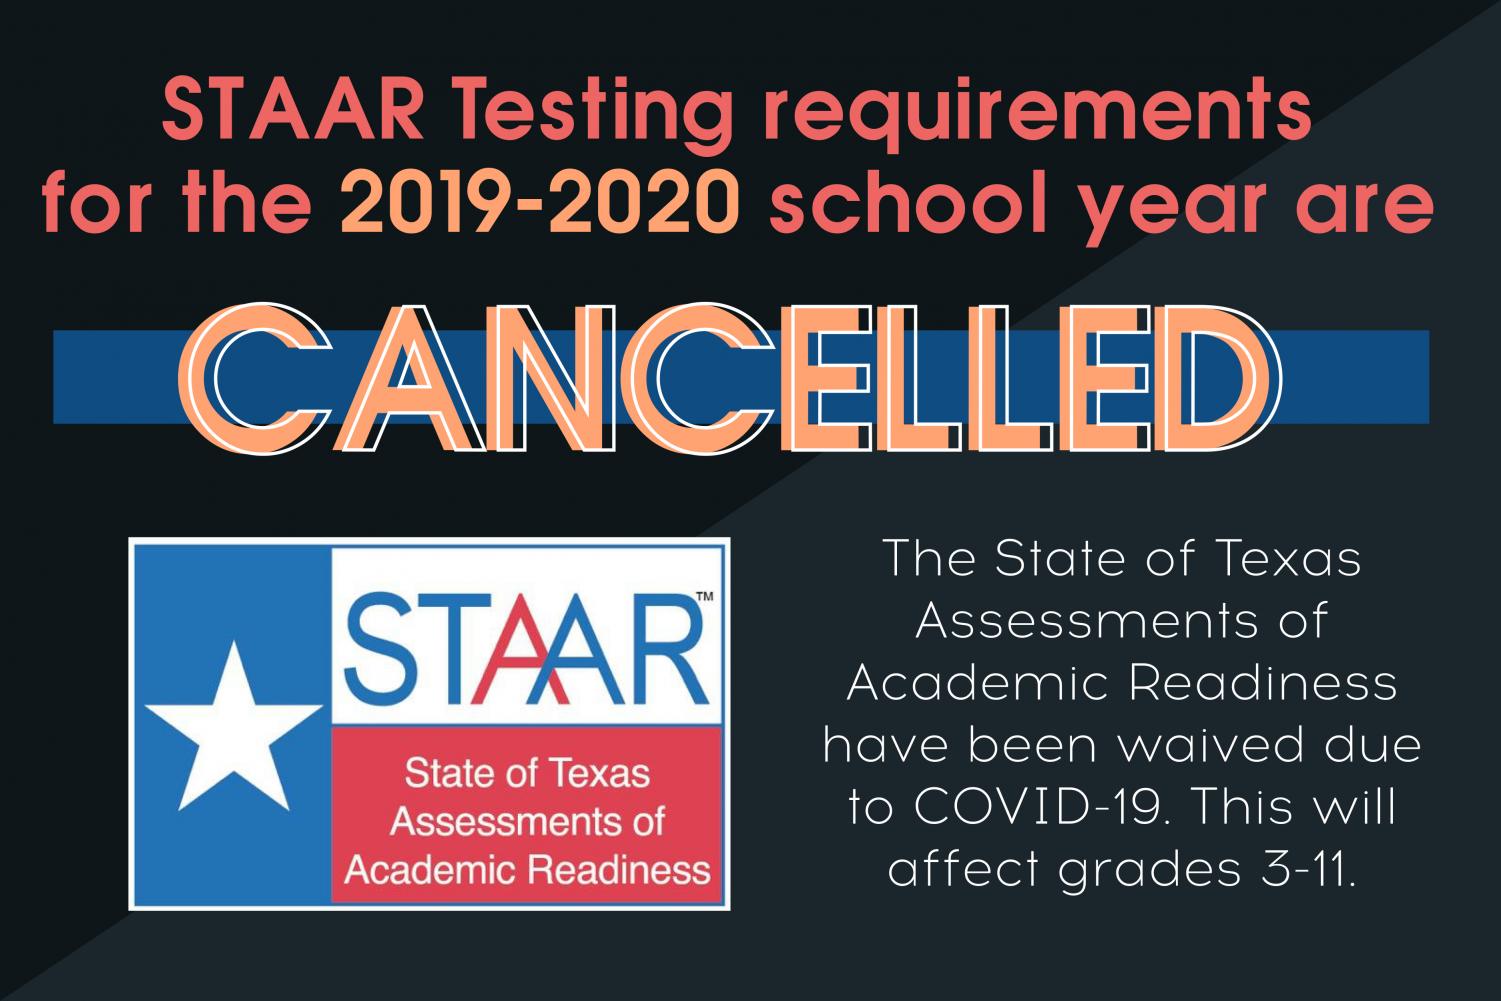 Texas suspends STAAR testing requirements for 201920 school year